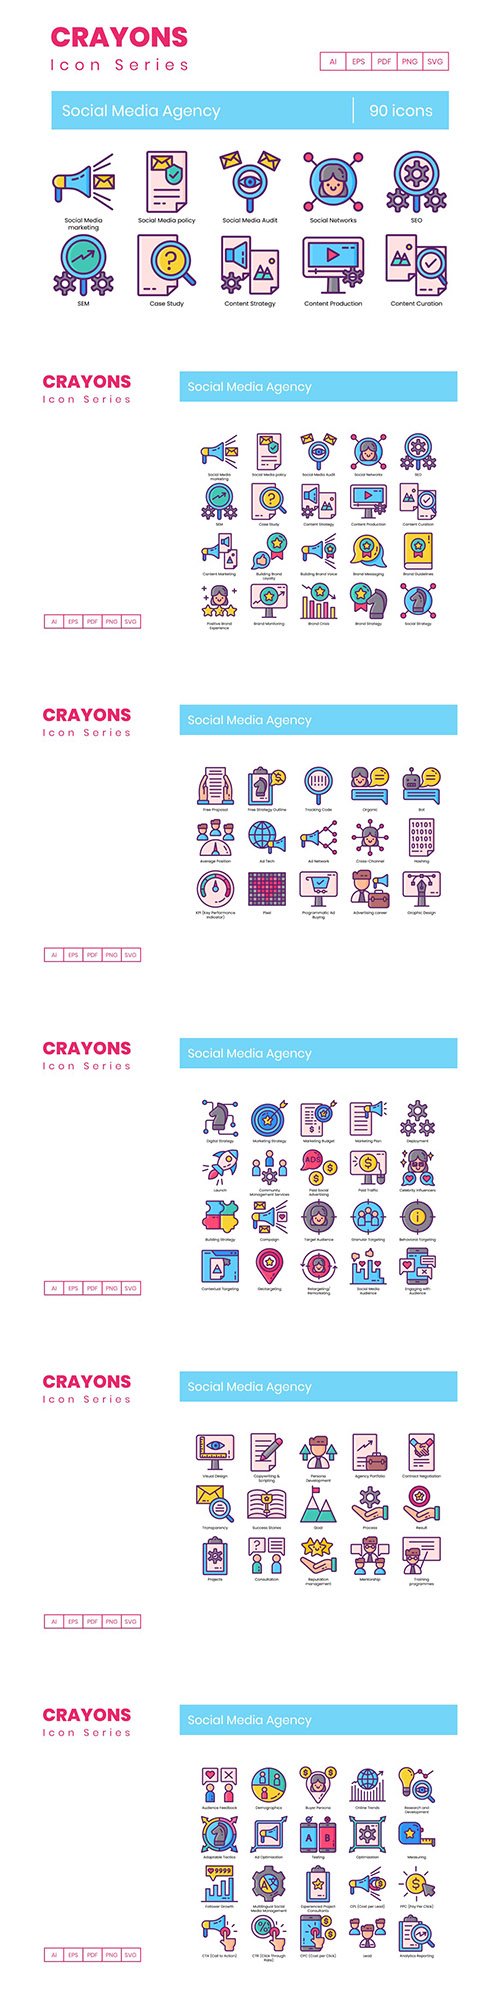 90 Social Media Agency Icons | Crayons Series